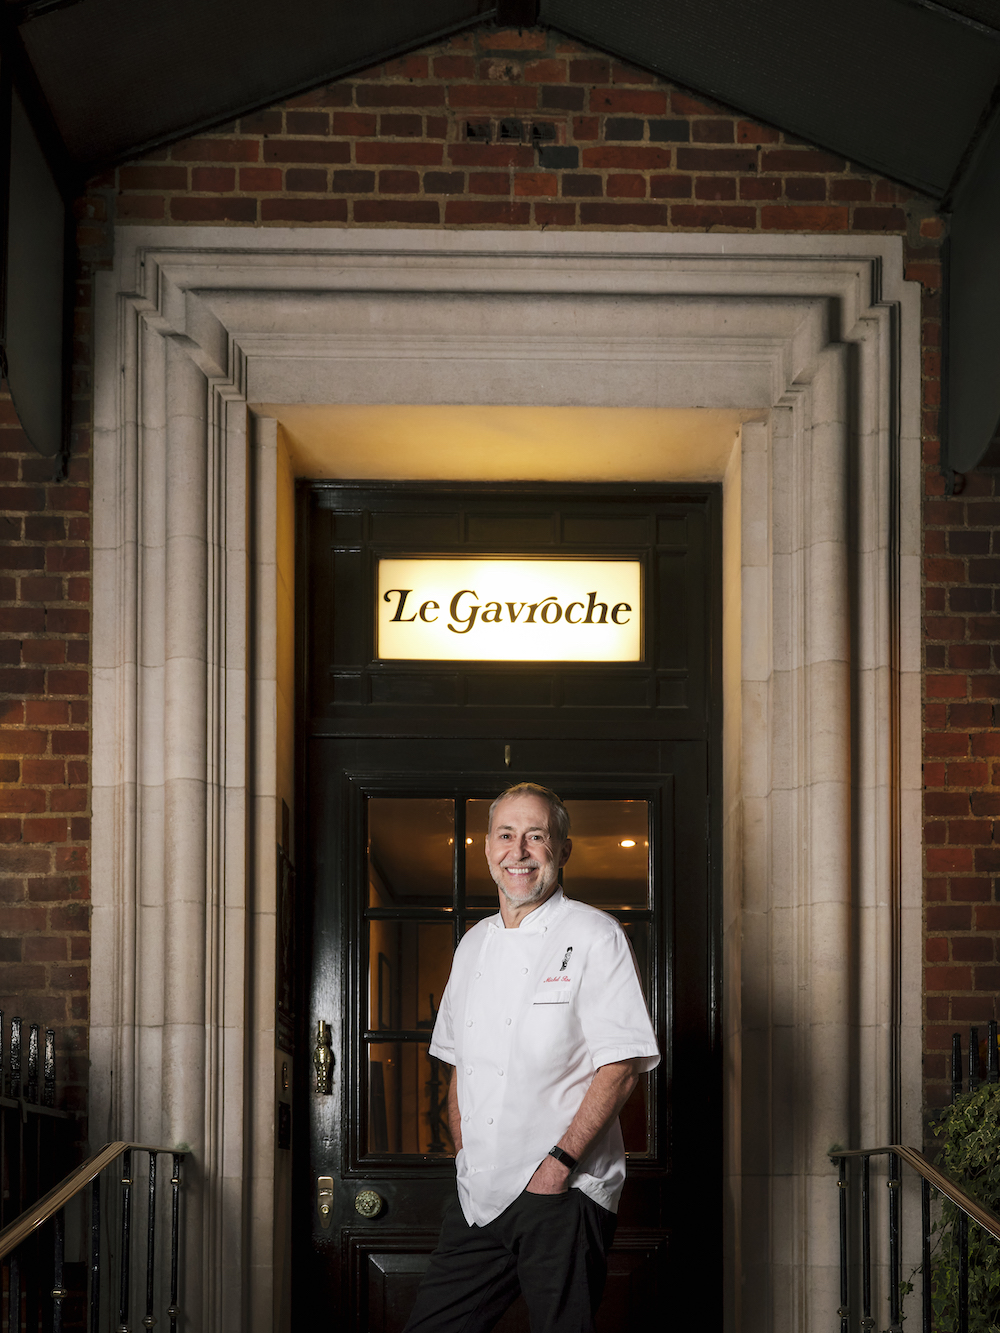 Michel Roux Jr. in the doorway of Le Gavroche restaurant in London